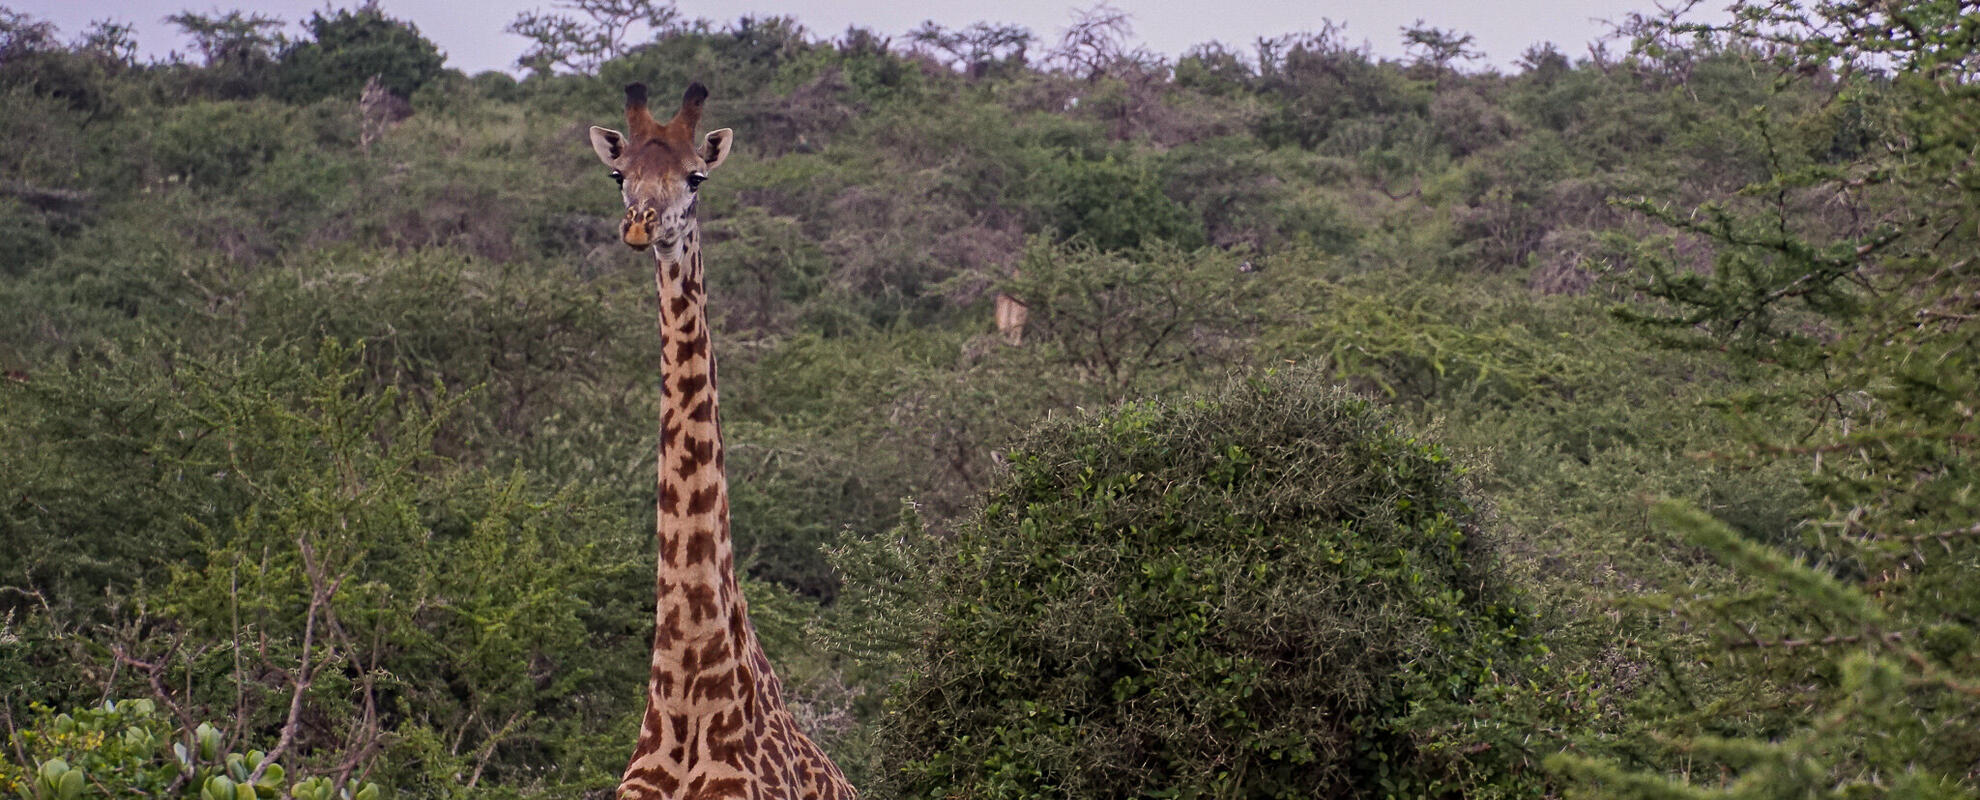 Giraffe at Kapiti (ILRI/Meyers)